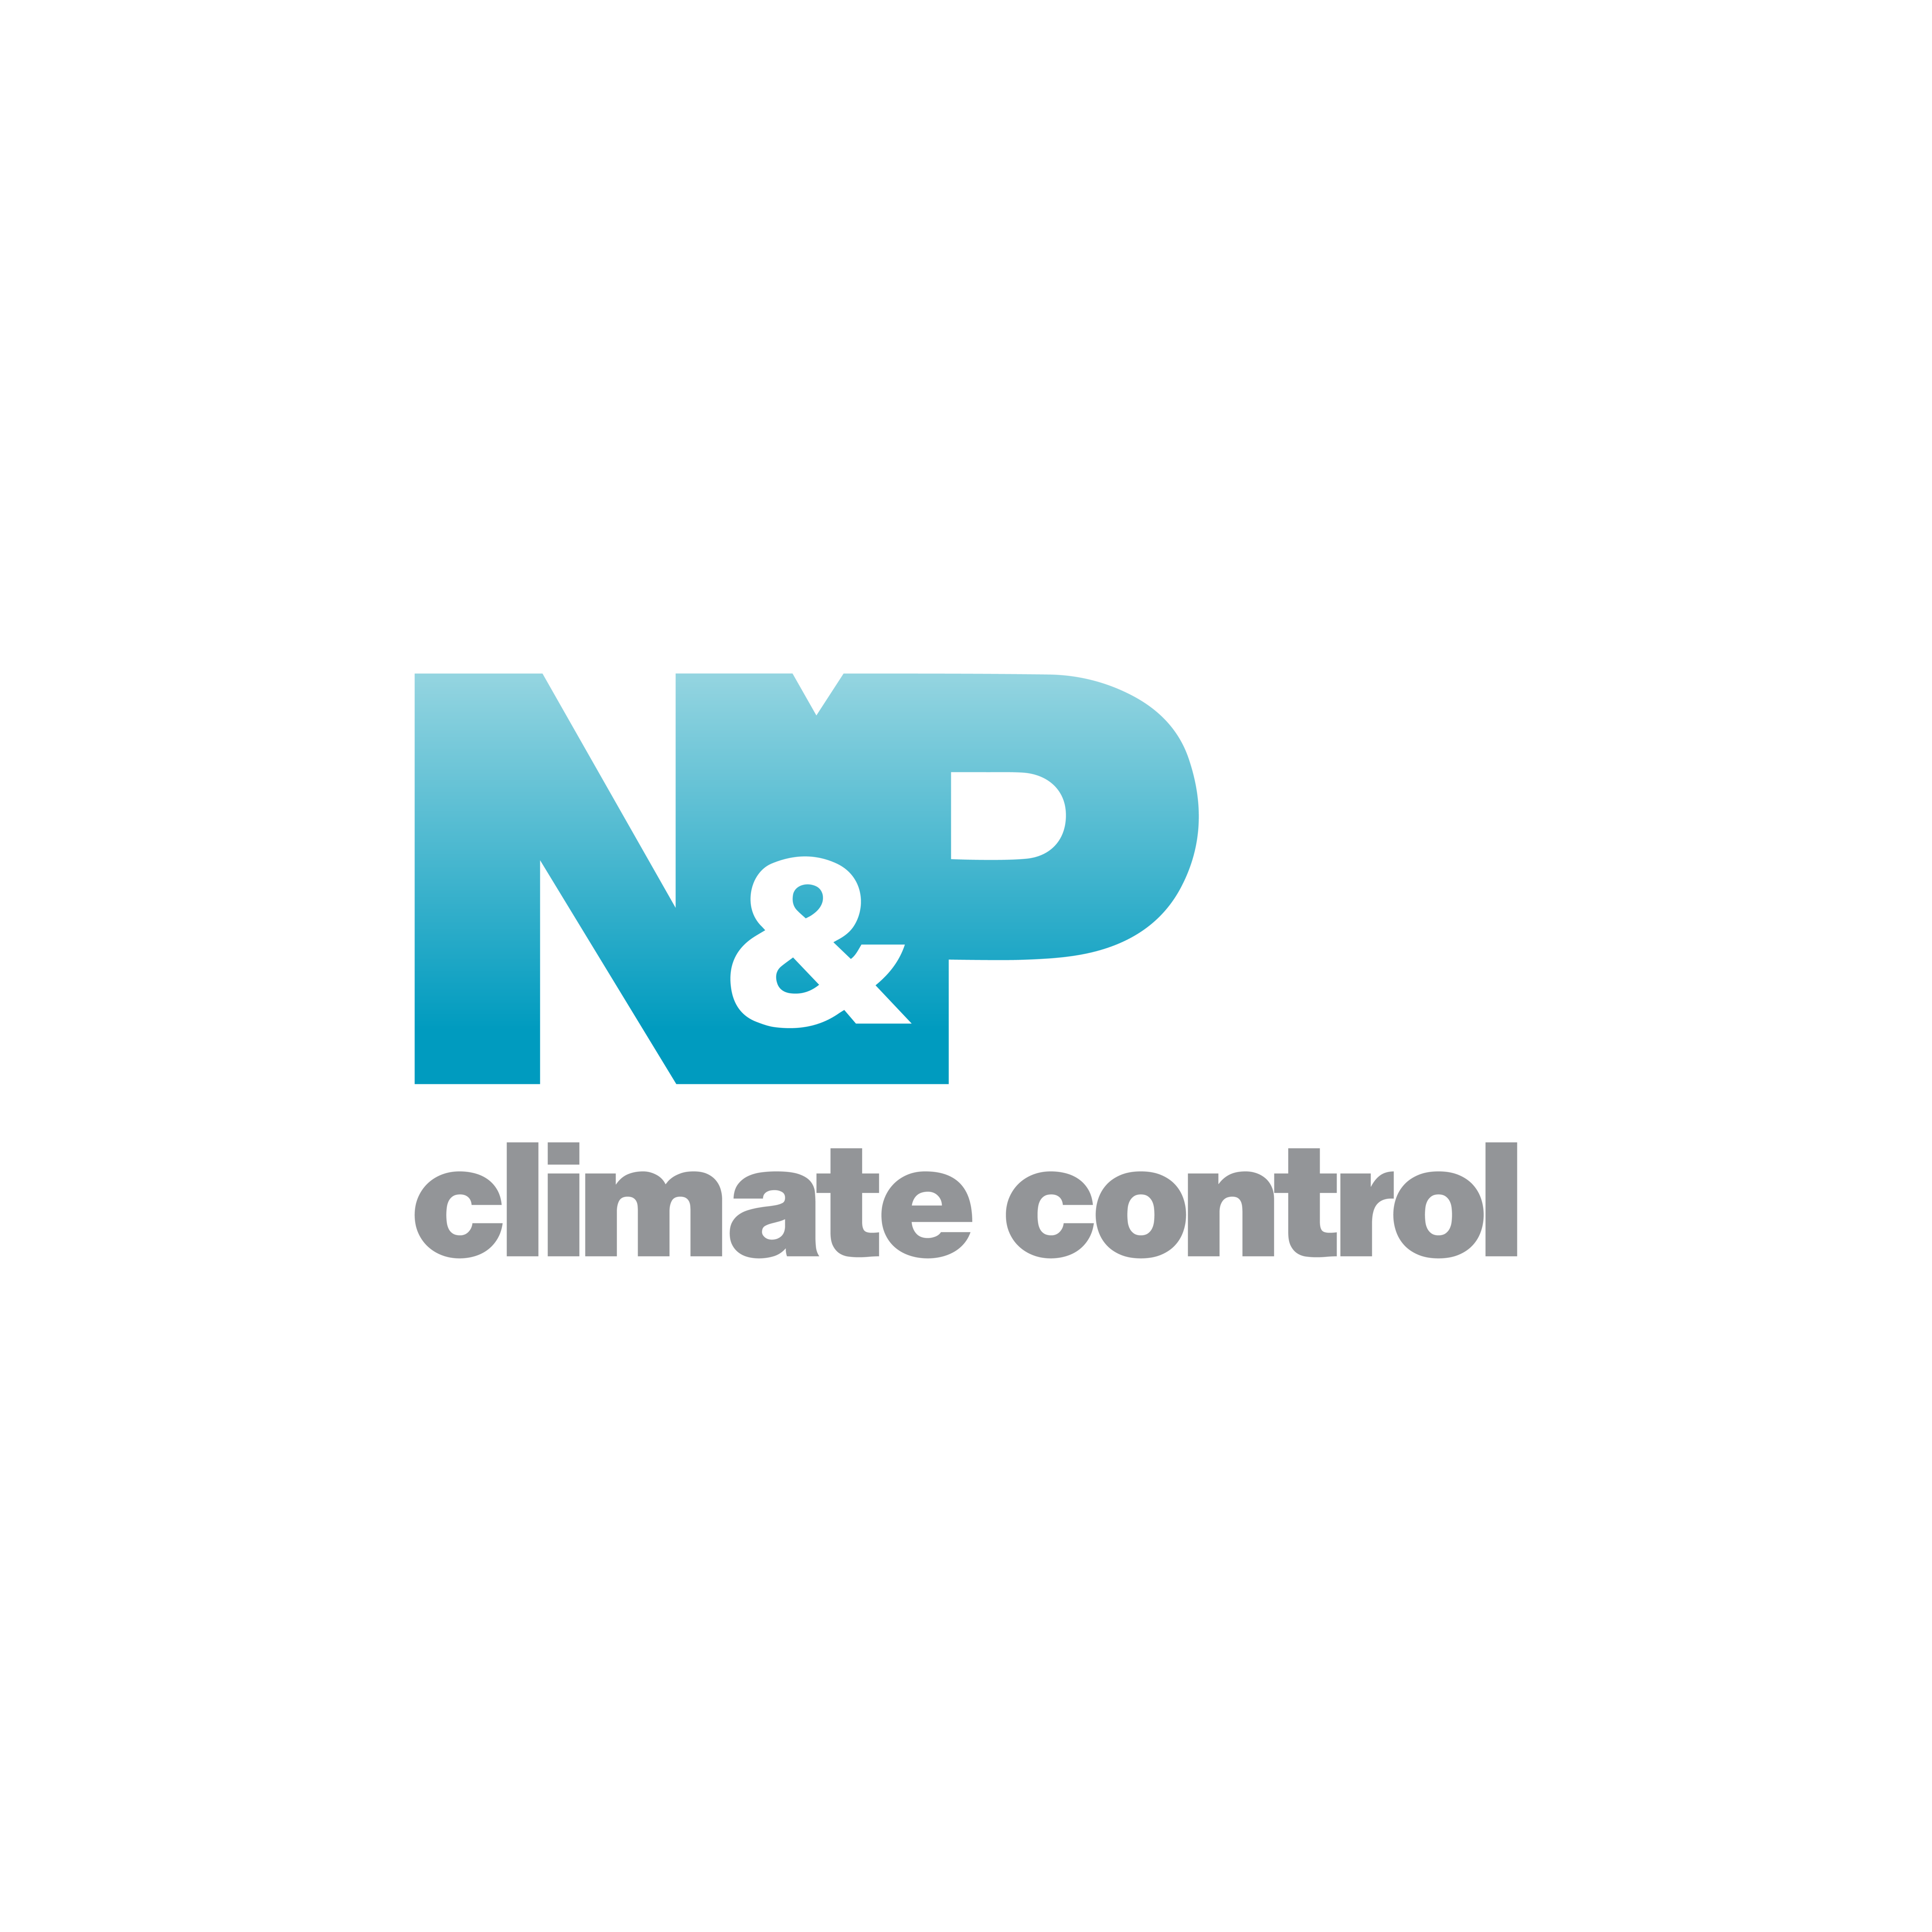 N&P climate control logo -01